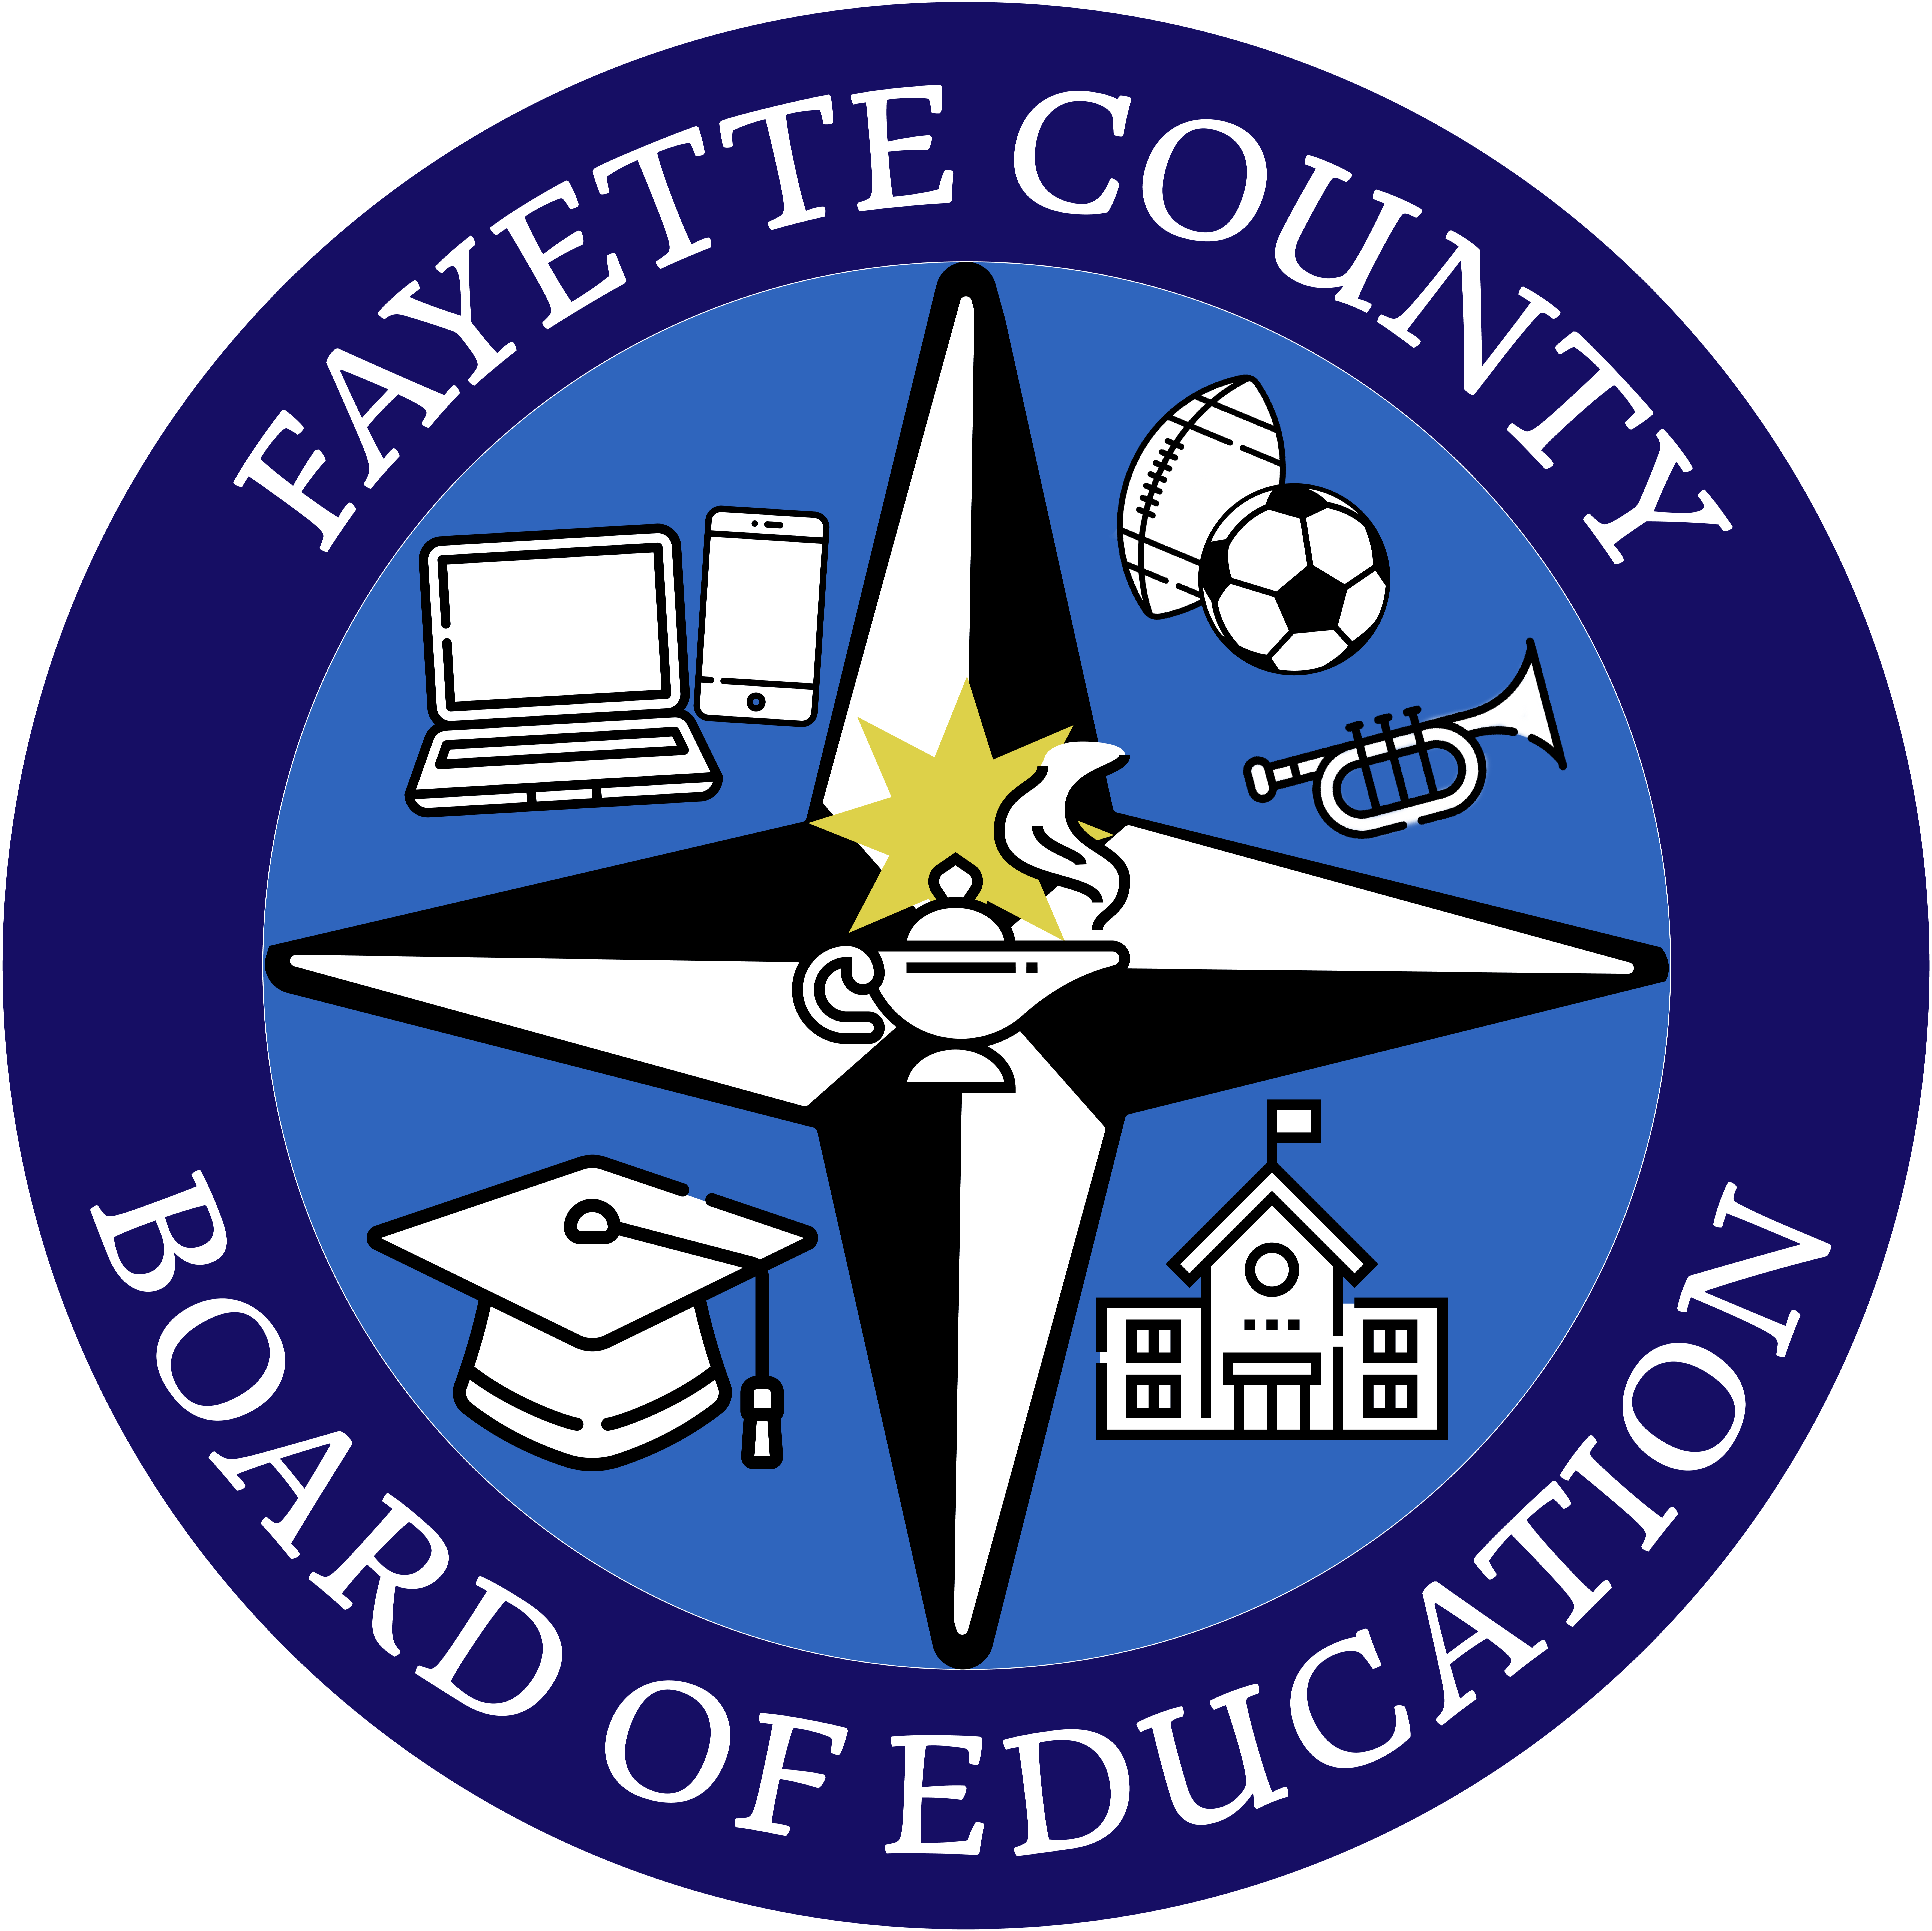 Board of Education seal